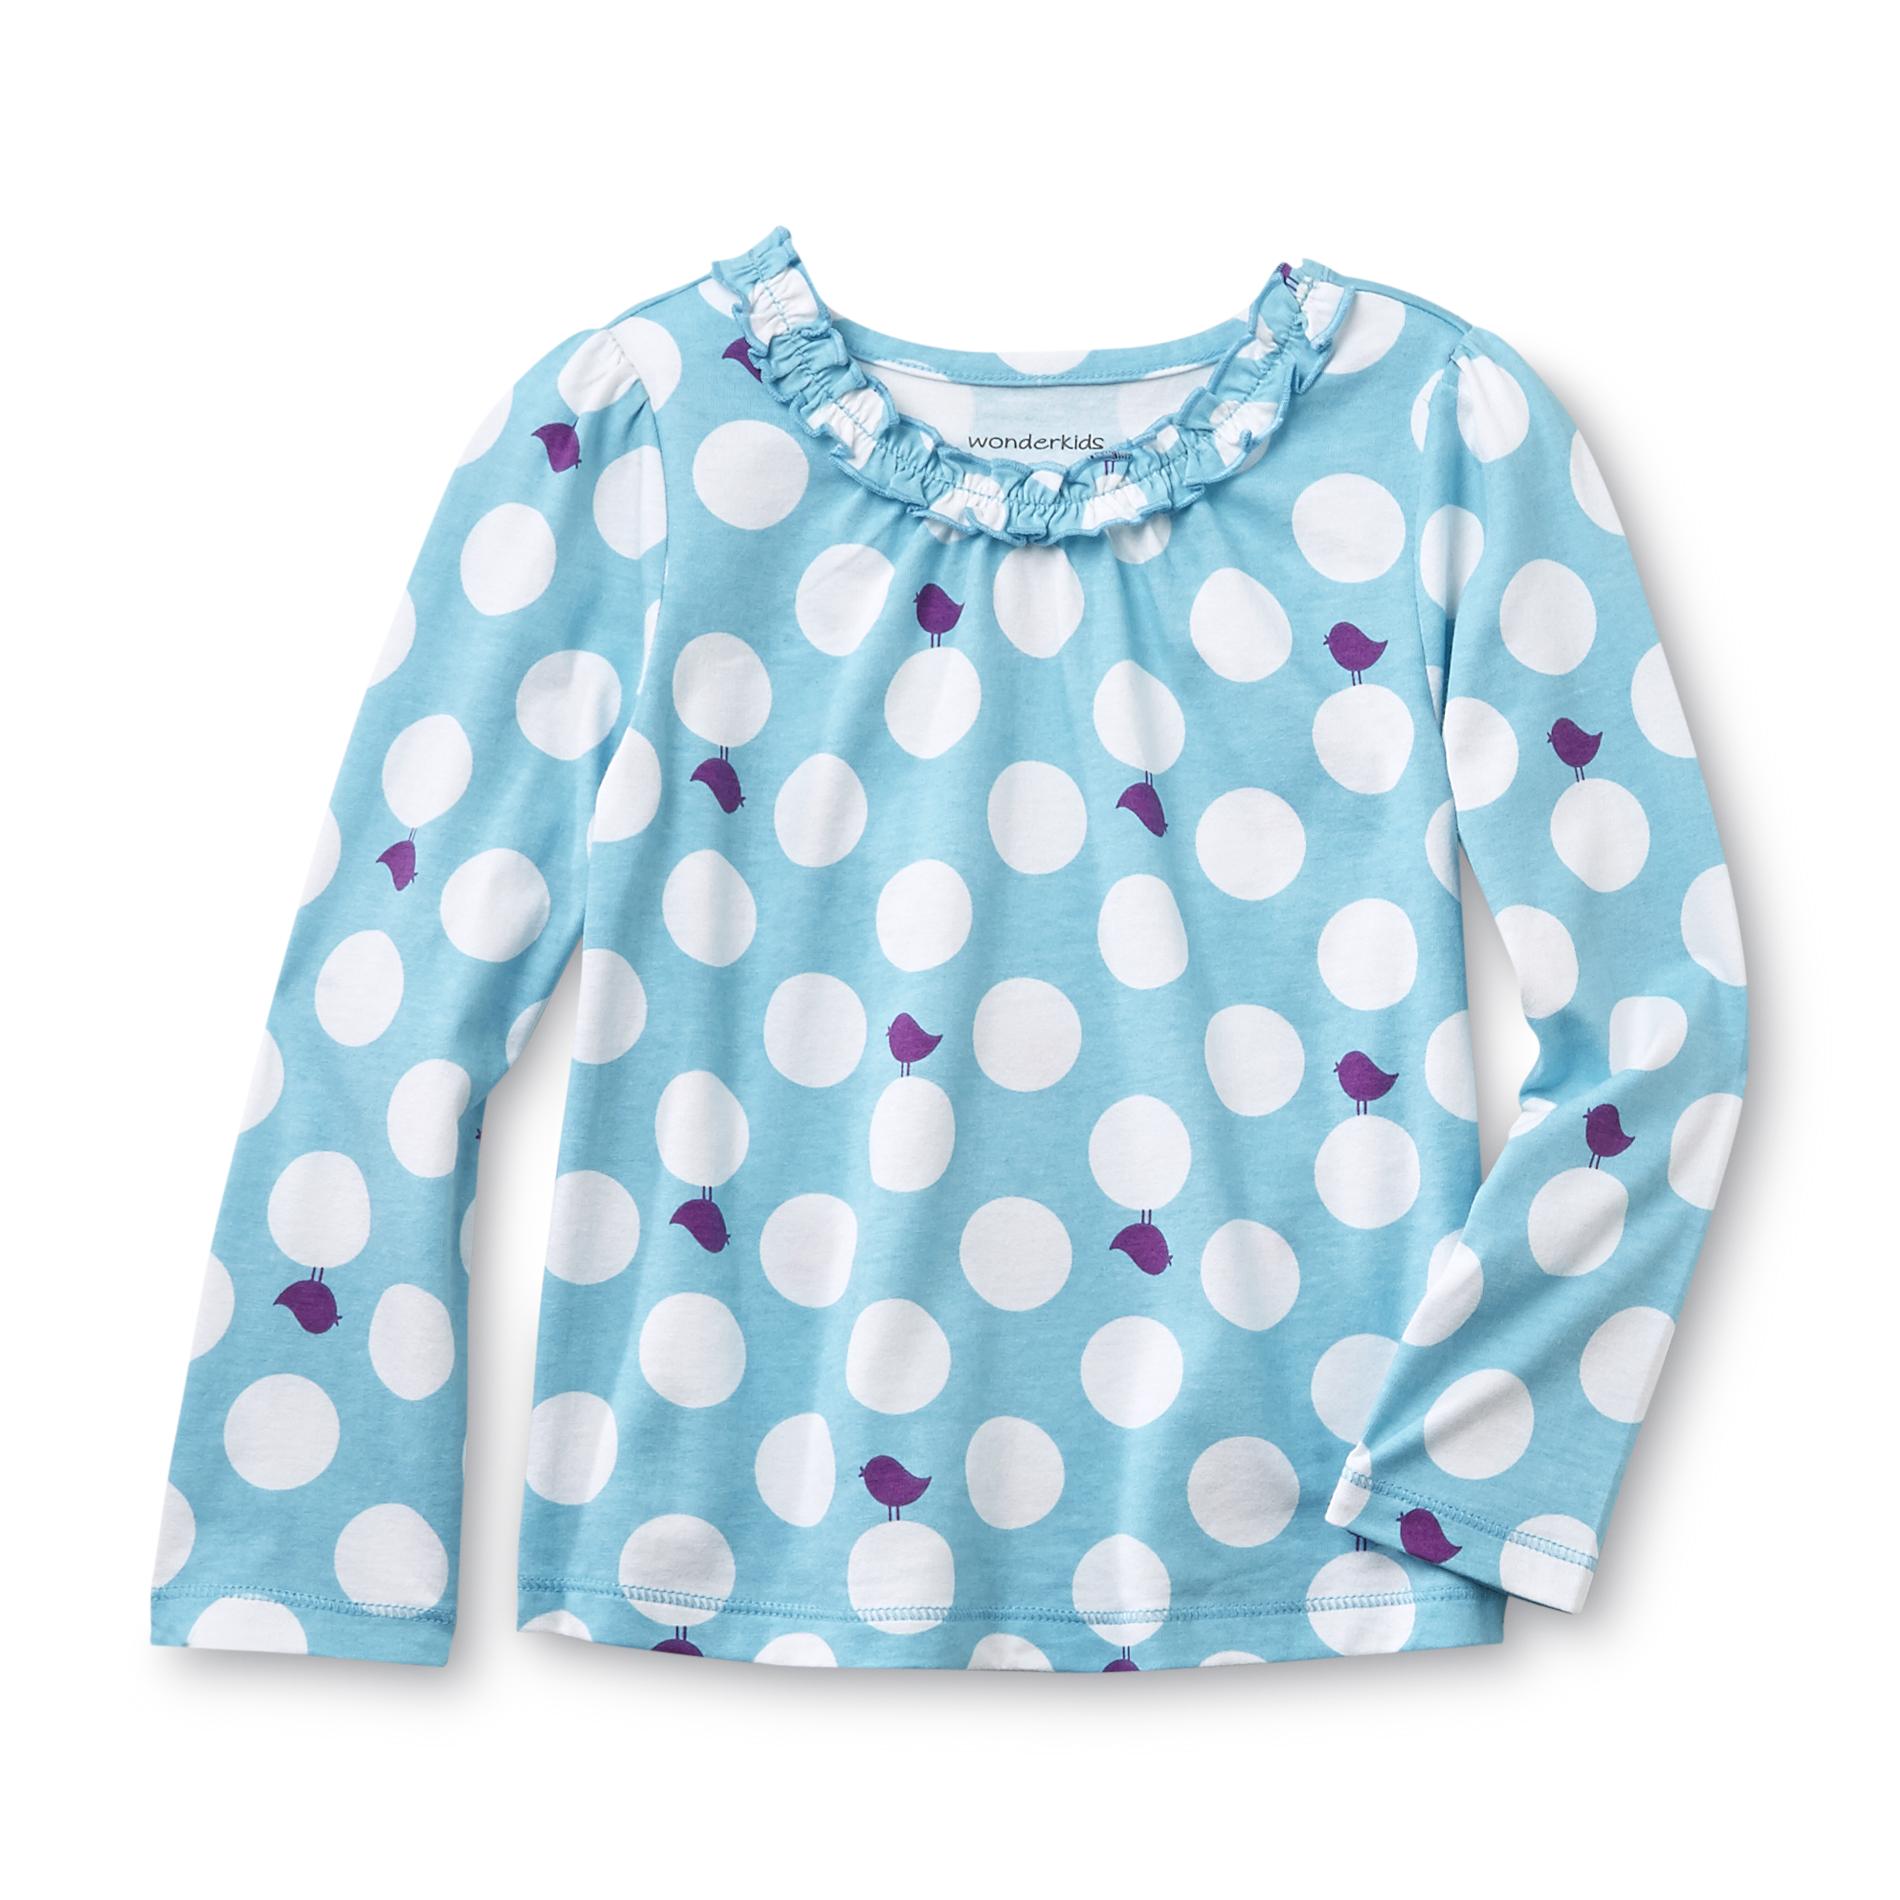 WonderKids Infant & Toddler Girl's Long-Sleeve Top - Polka Dots